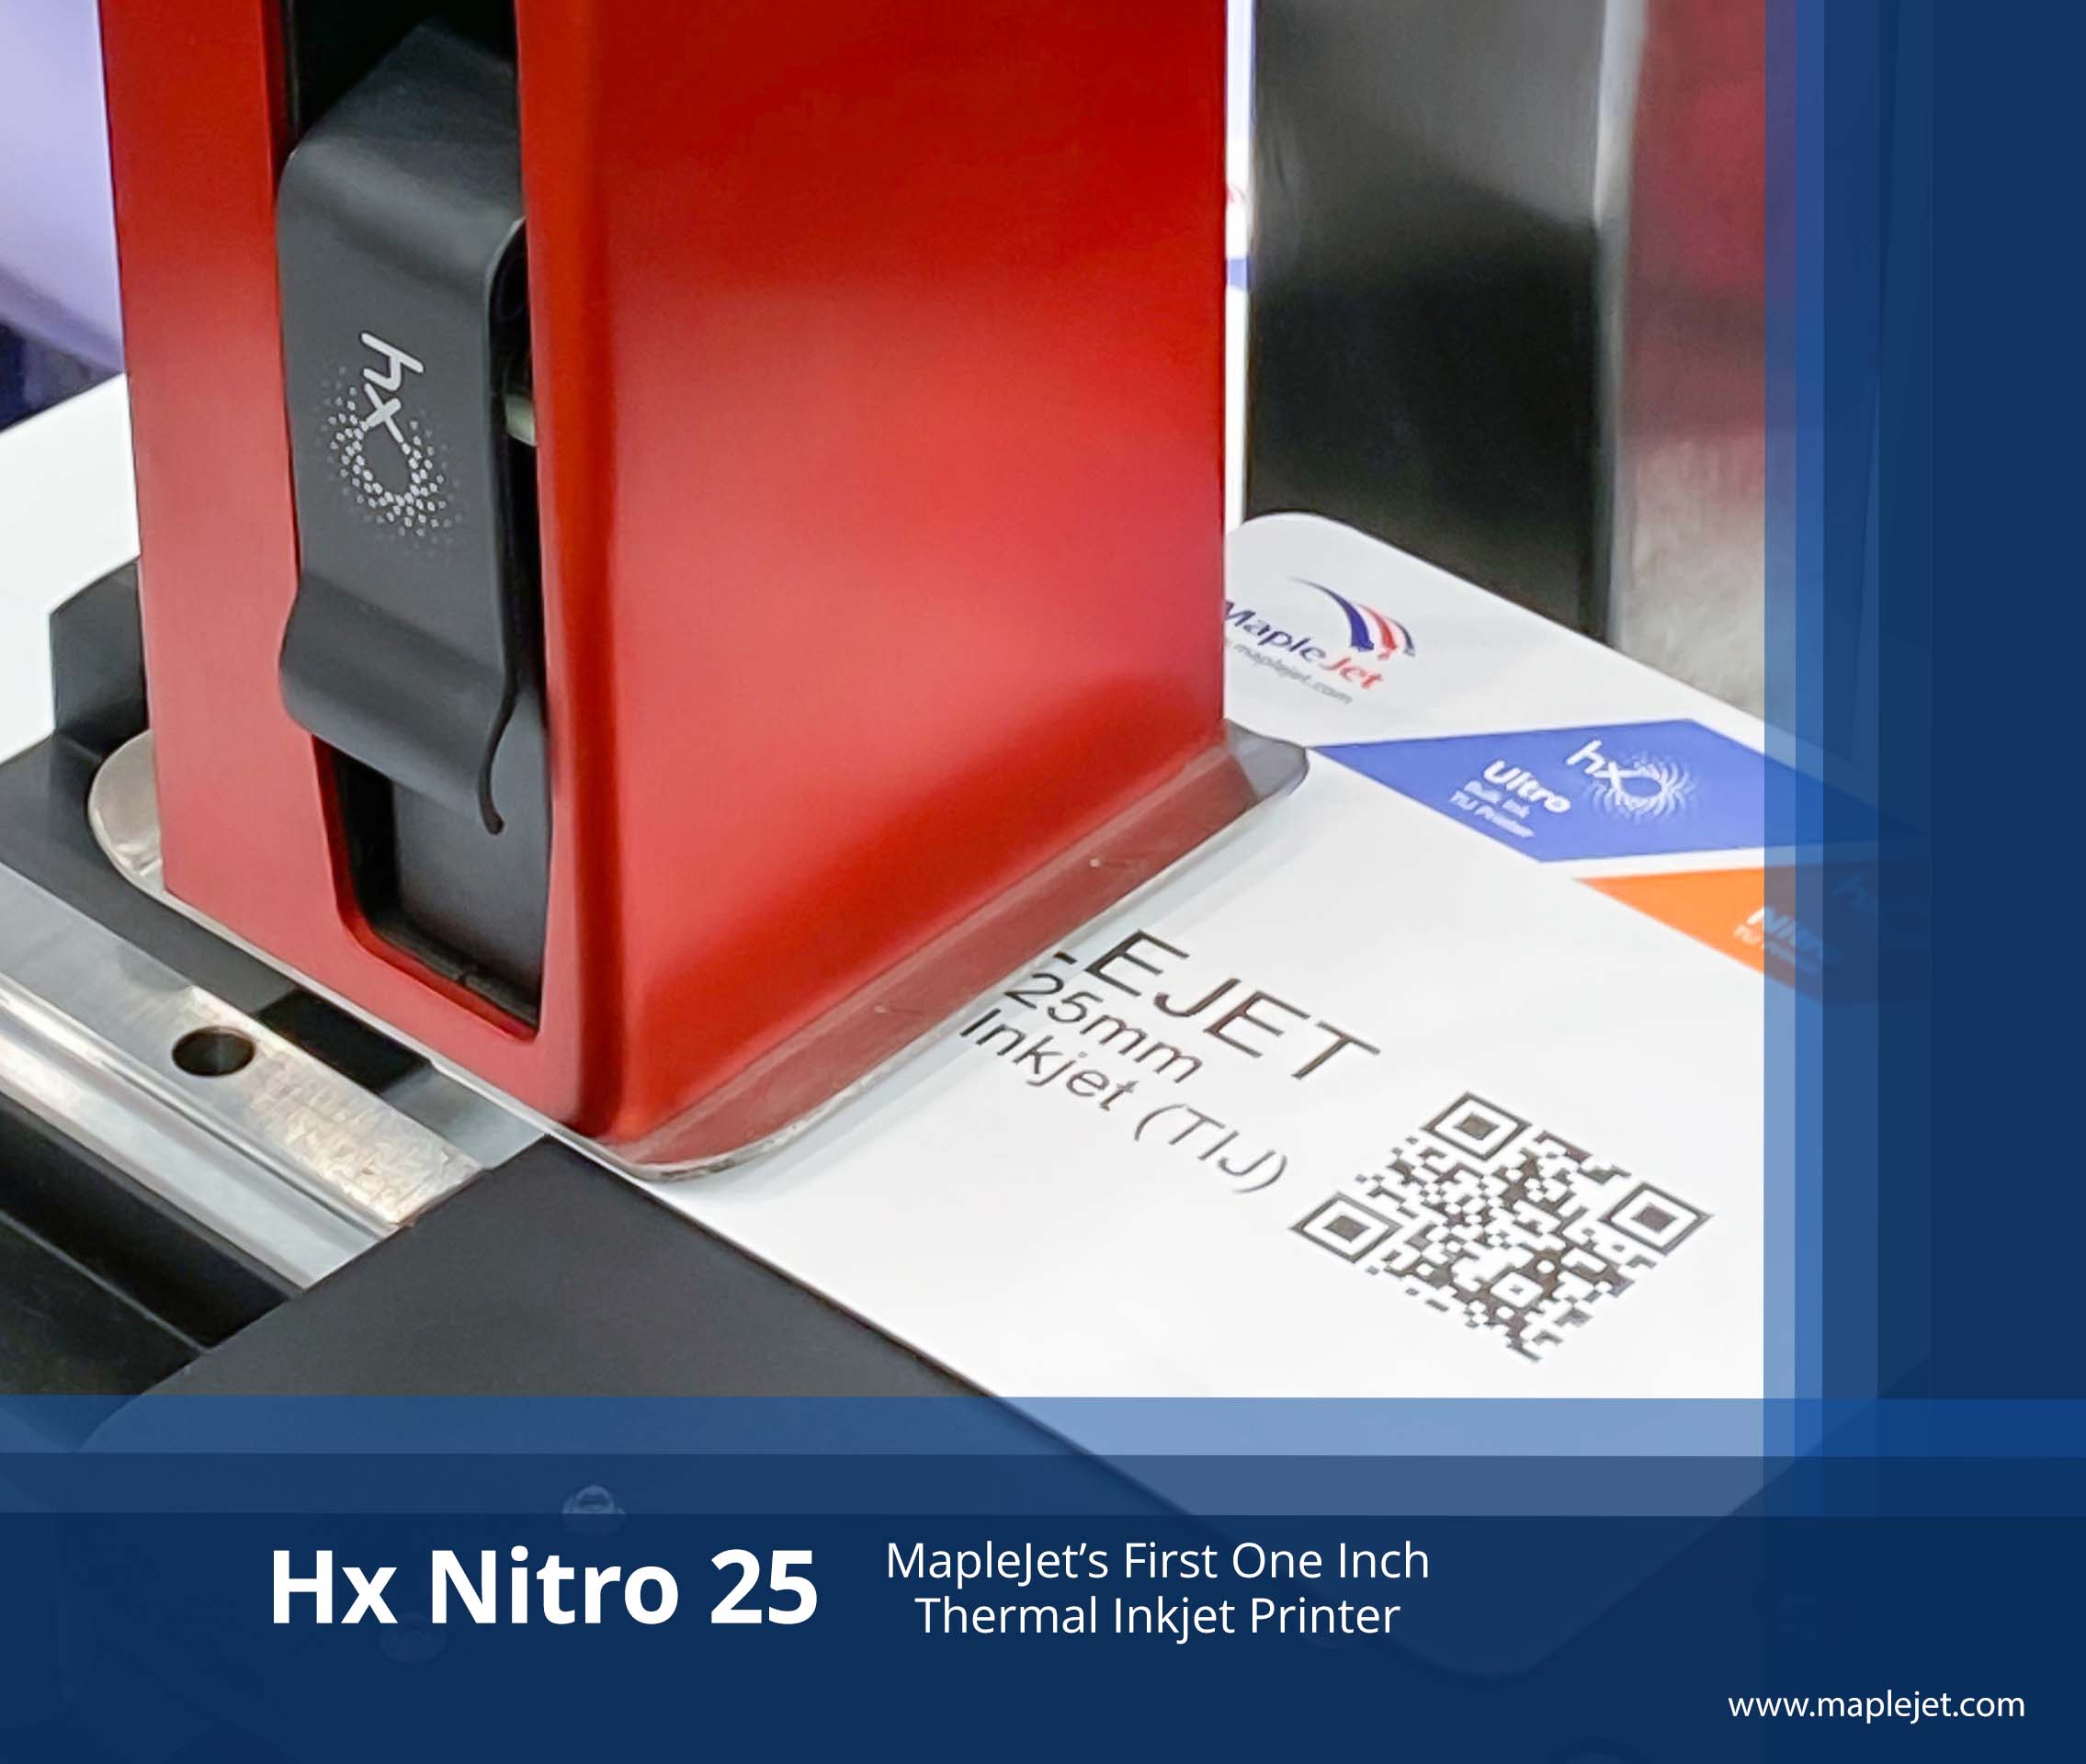 Introducing the revolutionary Hx Nitro 25 (one-inch) thermal inkjet (TIJ) printer!